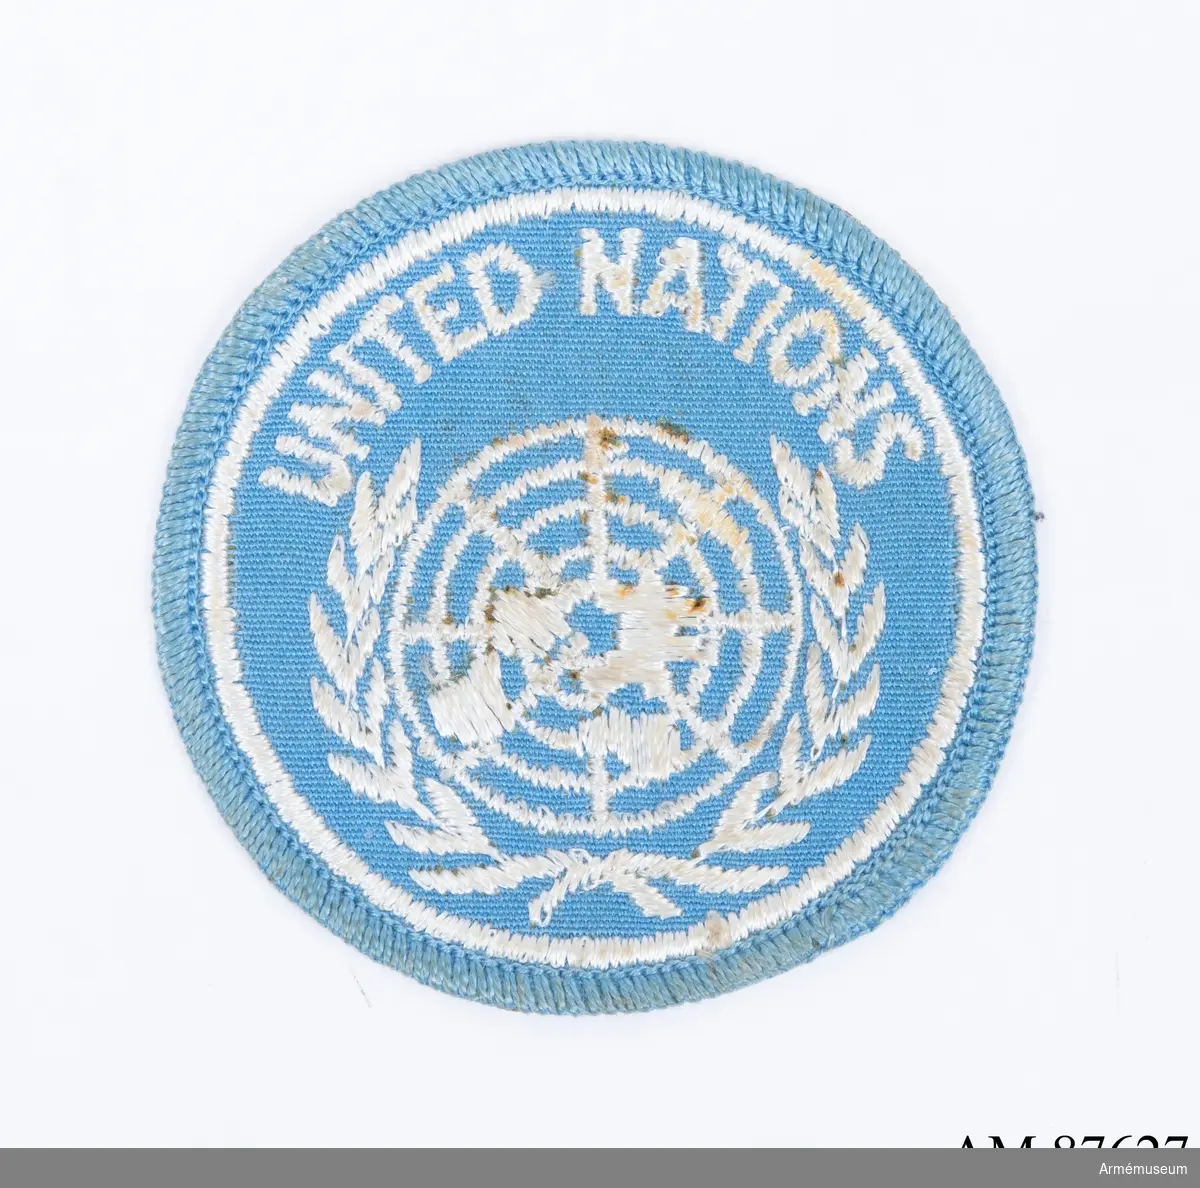 United Nation ljusblå tygmärke